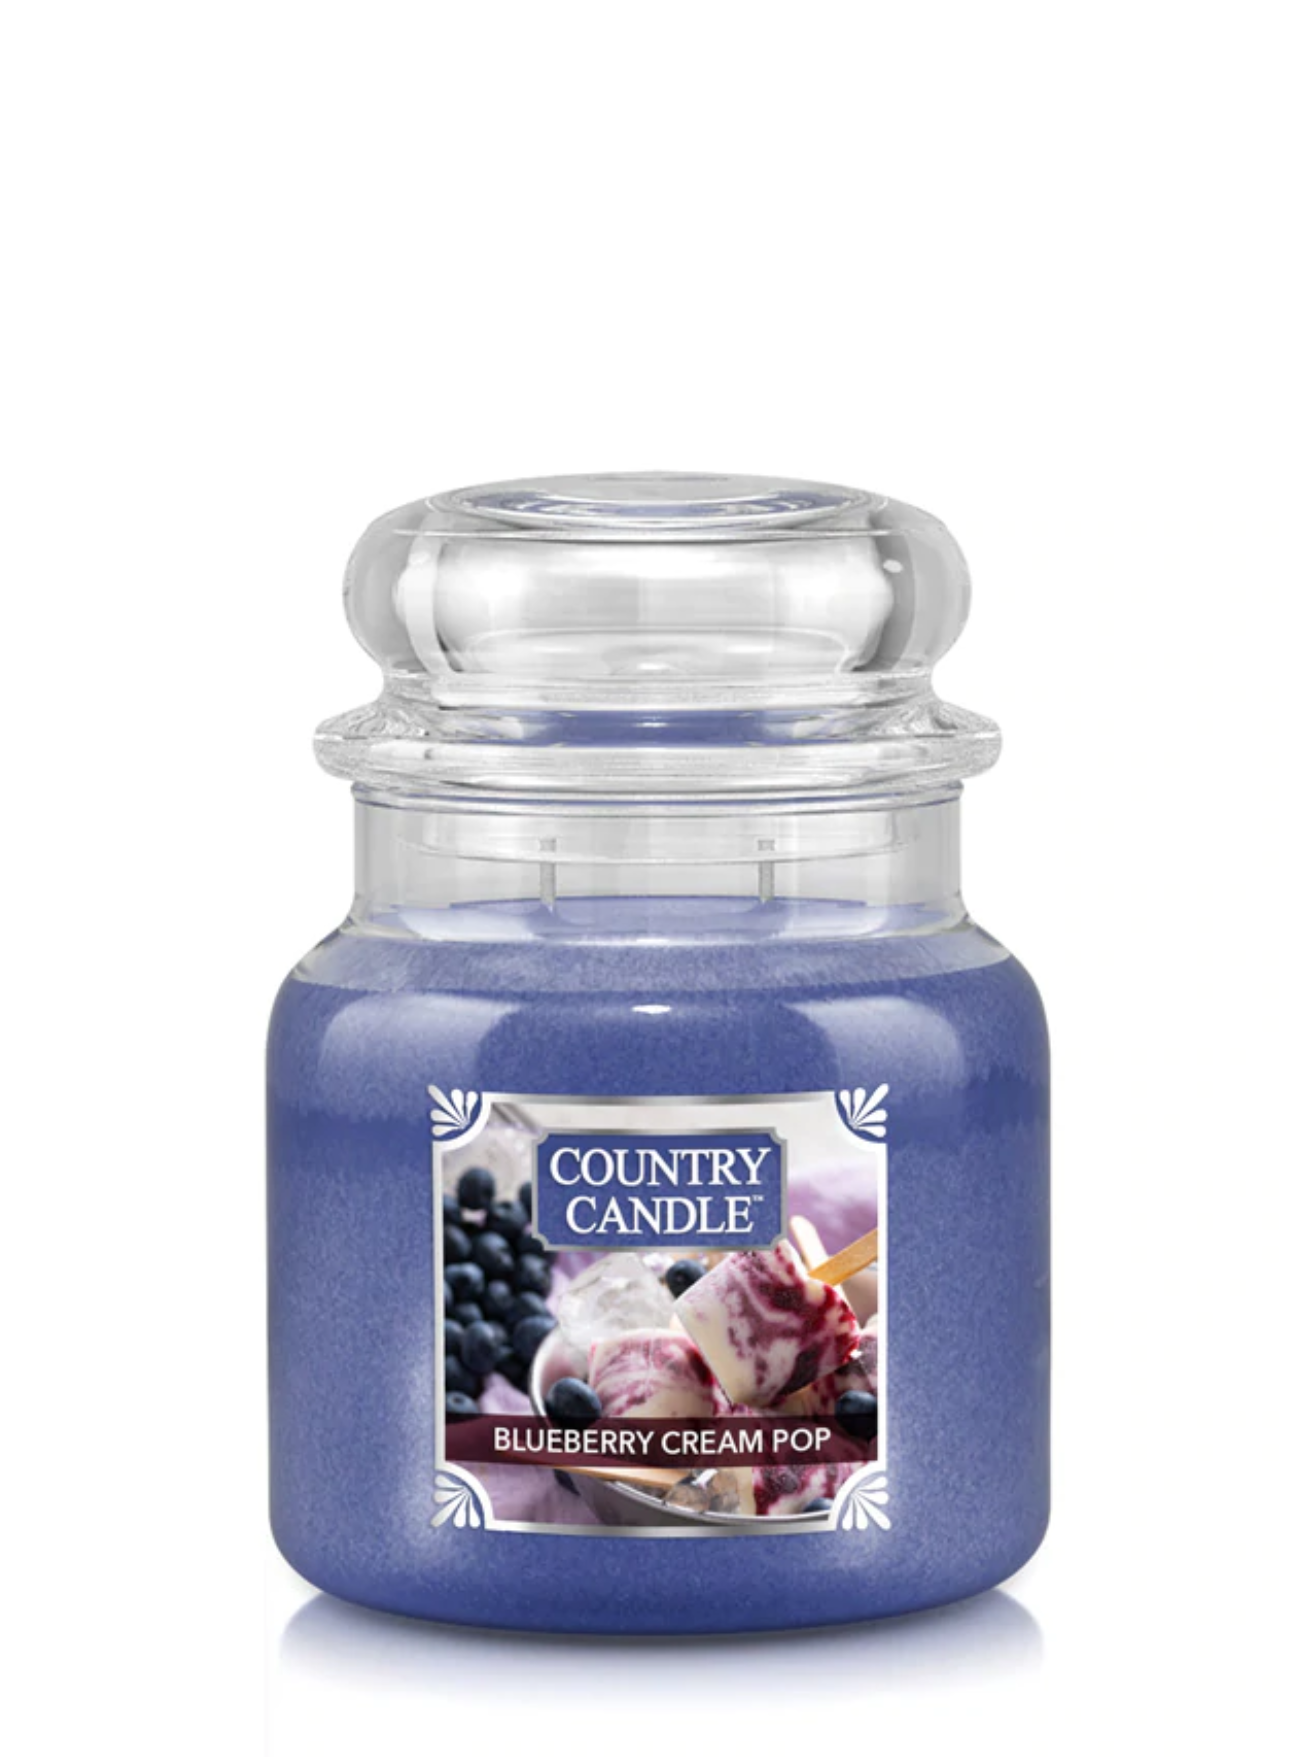 Country Candle Medium Jar Blueberry Cream Pop